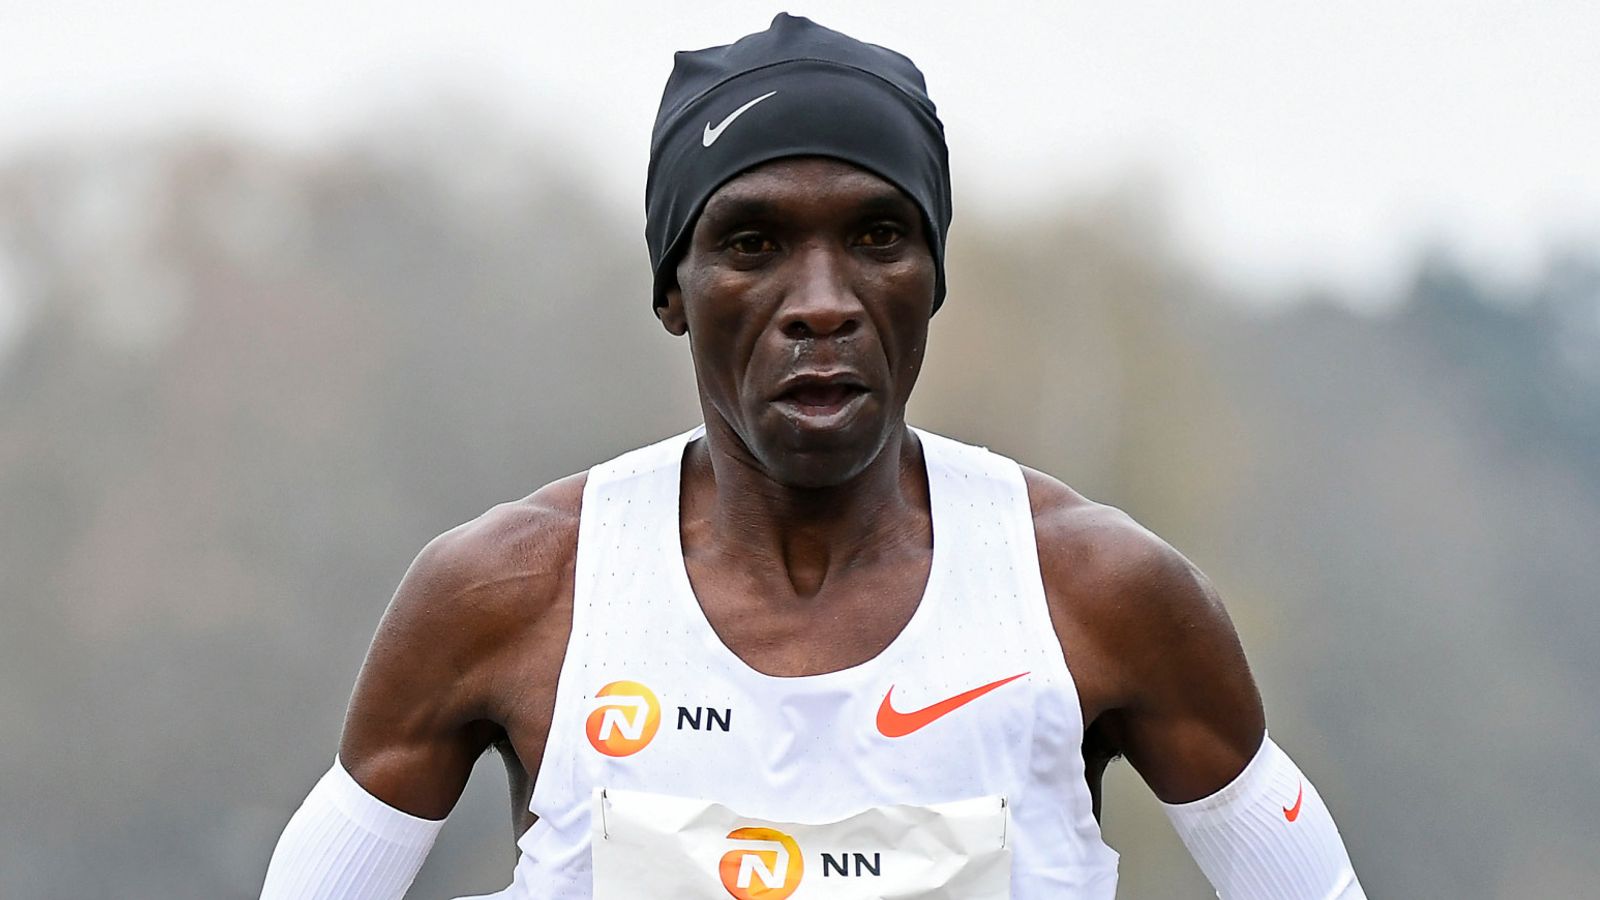 Eliud Kipchoge breaks his own world-record Marathon time in Berlin